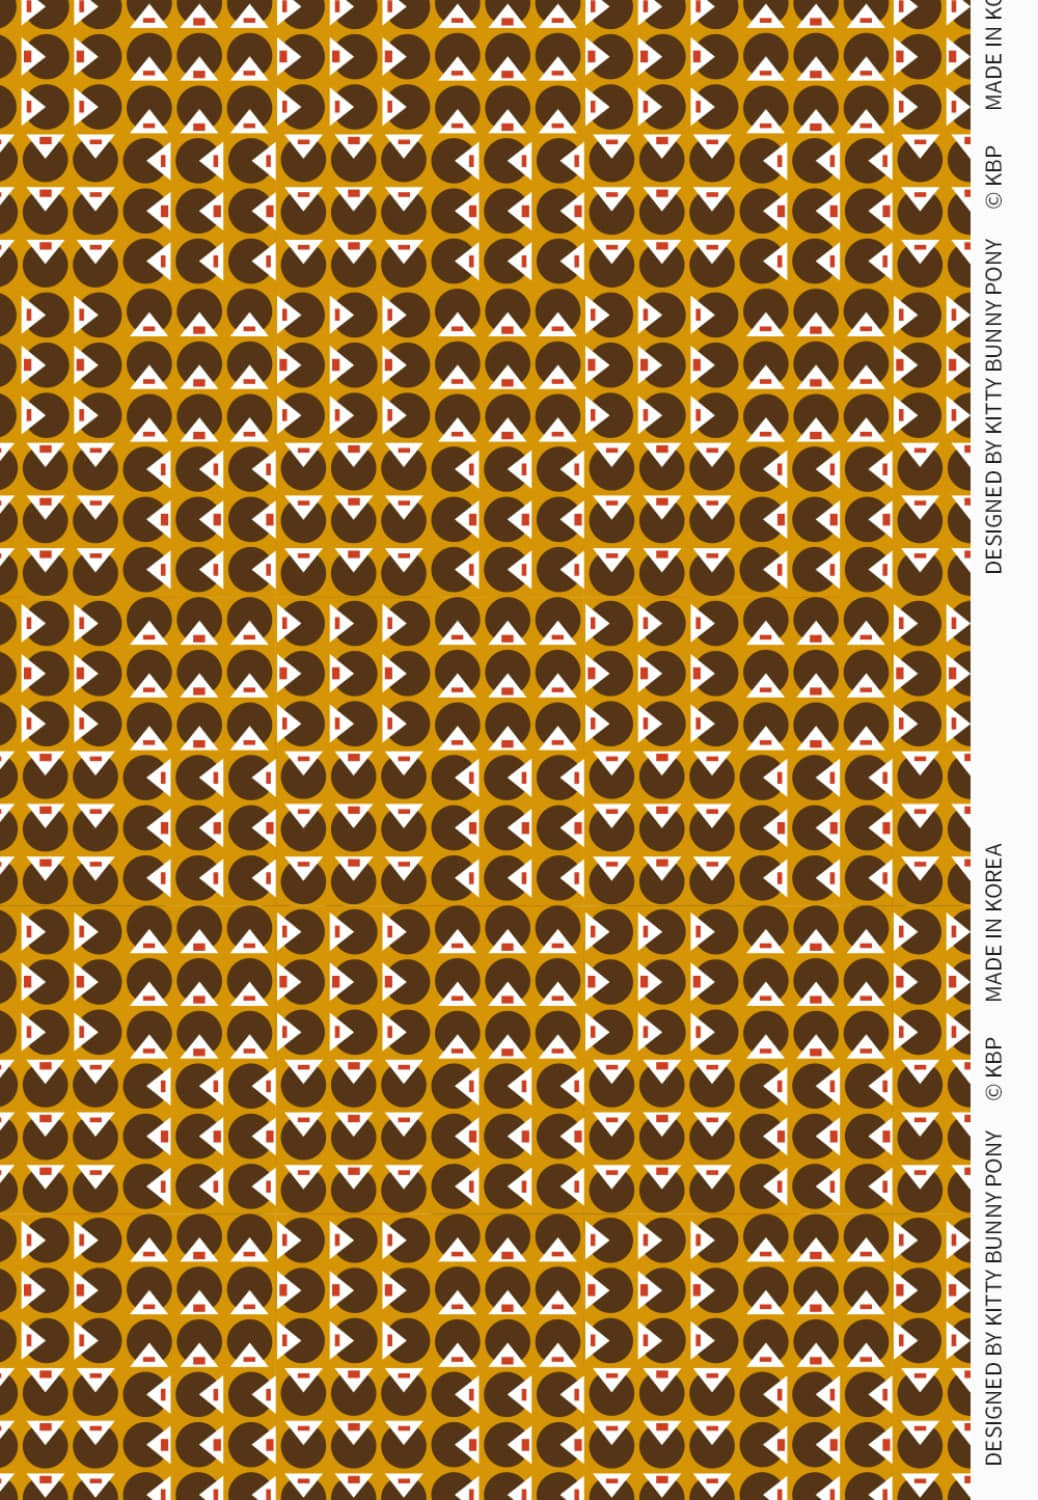 KBP Fabrics Patio Yellow Fabric